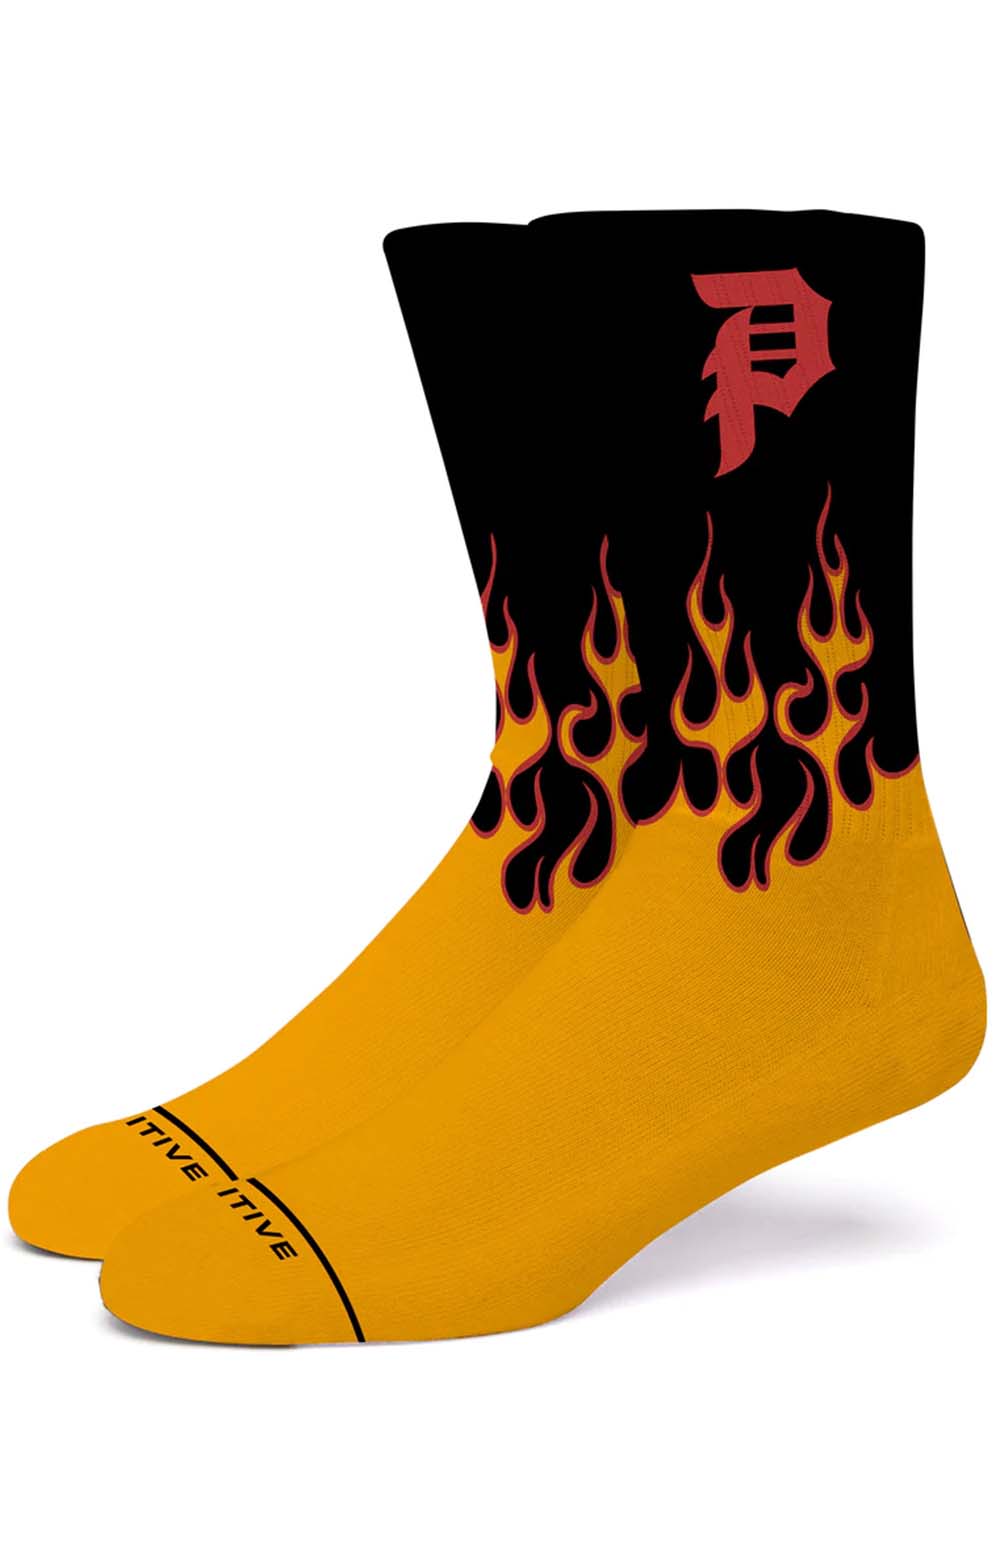 Burnout Socks - Black